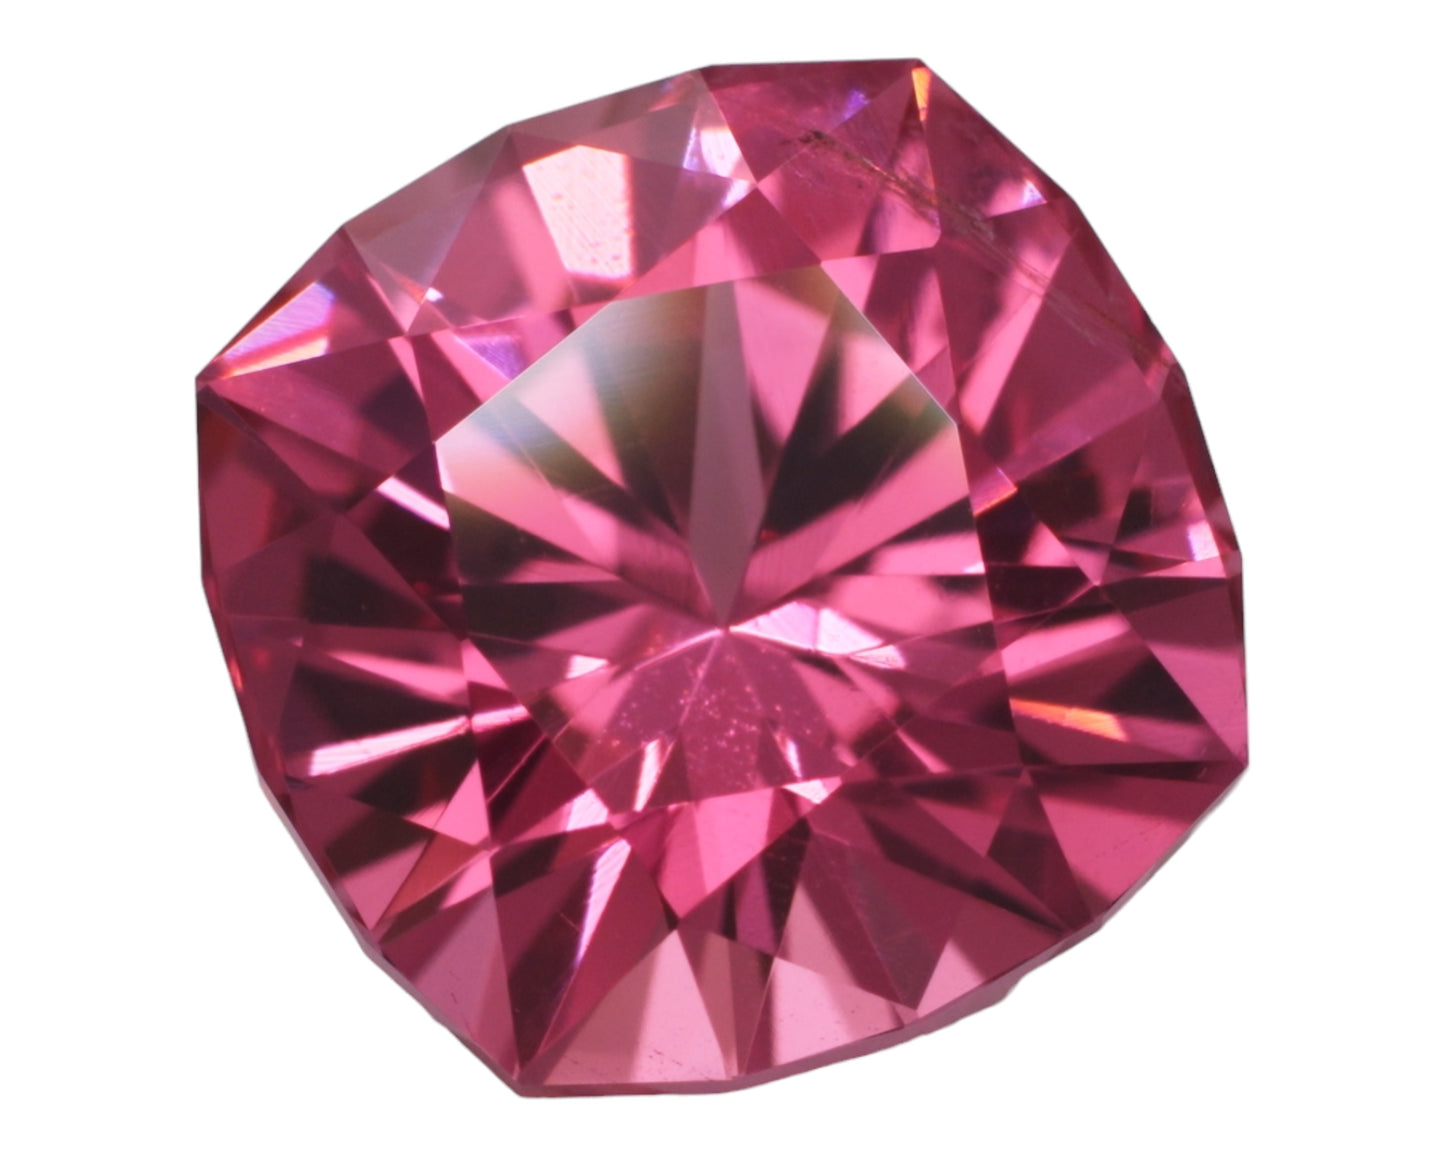 2.27 carats vivid pink Spinel - cushion shape